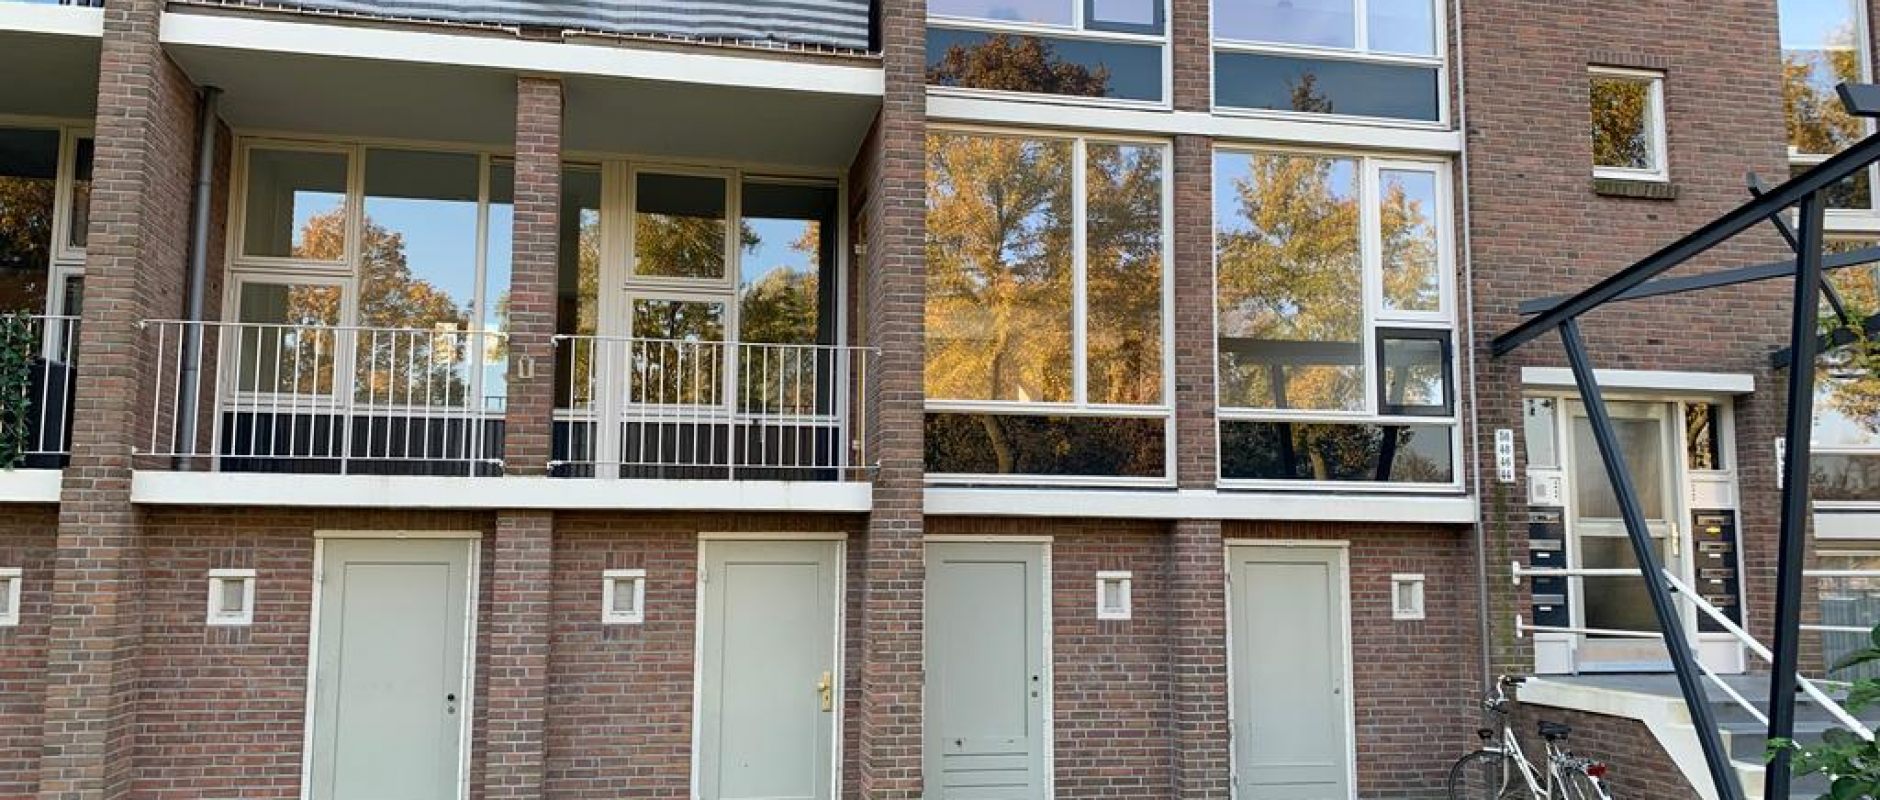 Woning te koop aan de Ten Oeverstraat 44 te Zwolle